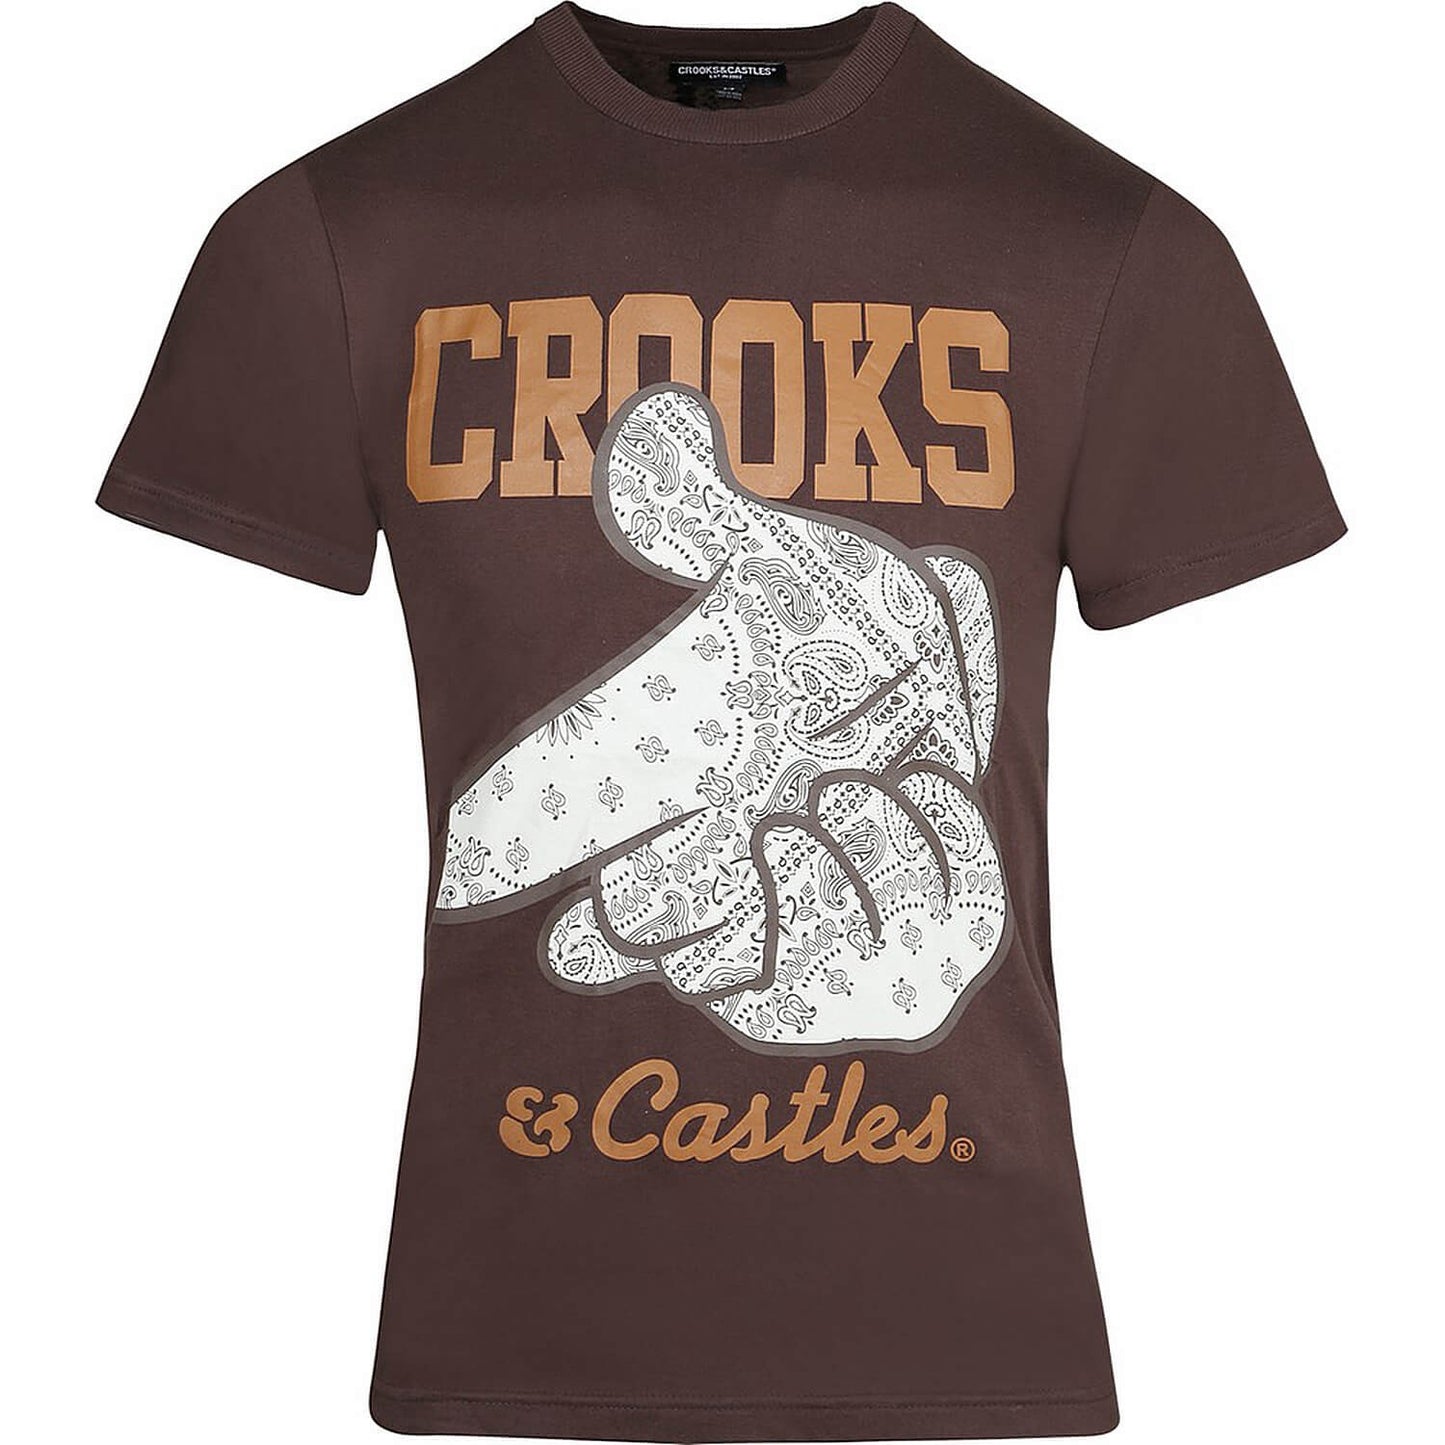 Crooks & Castles brown shirt